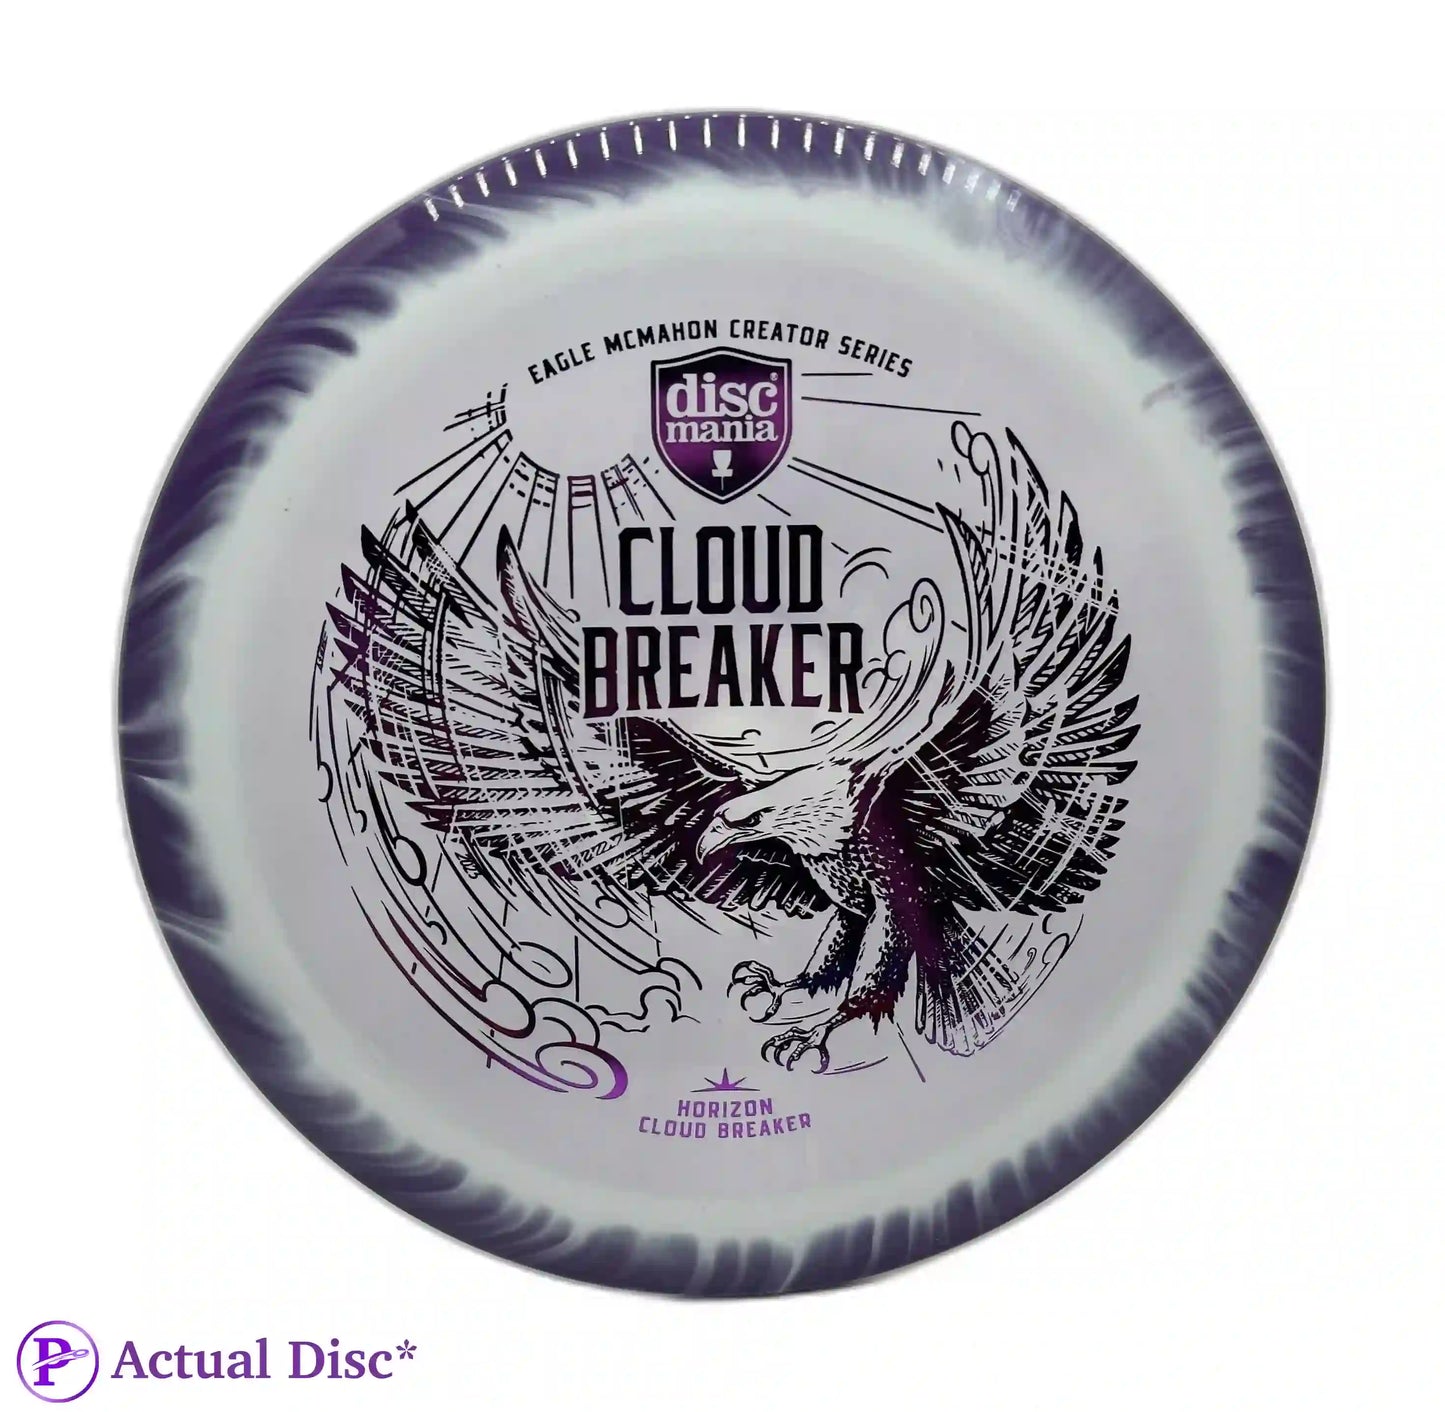 Eagle Mcmahon Creator Series Horizon Cloud Breaker